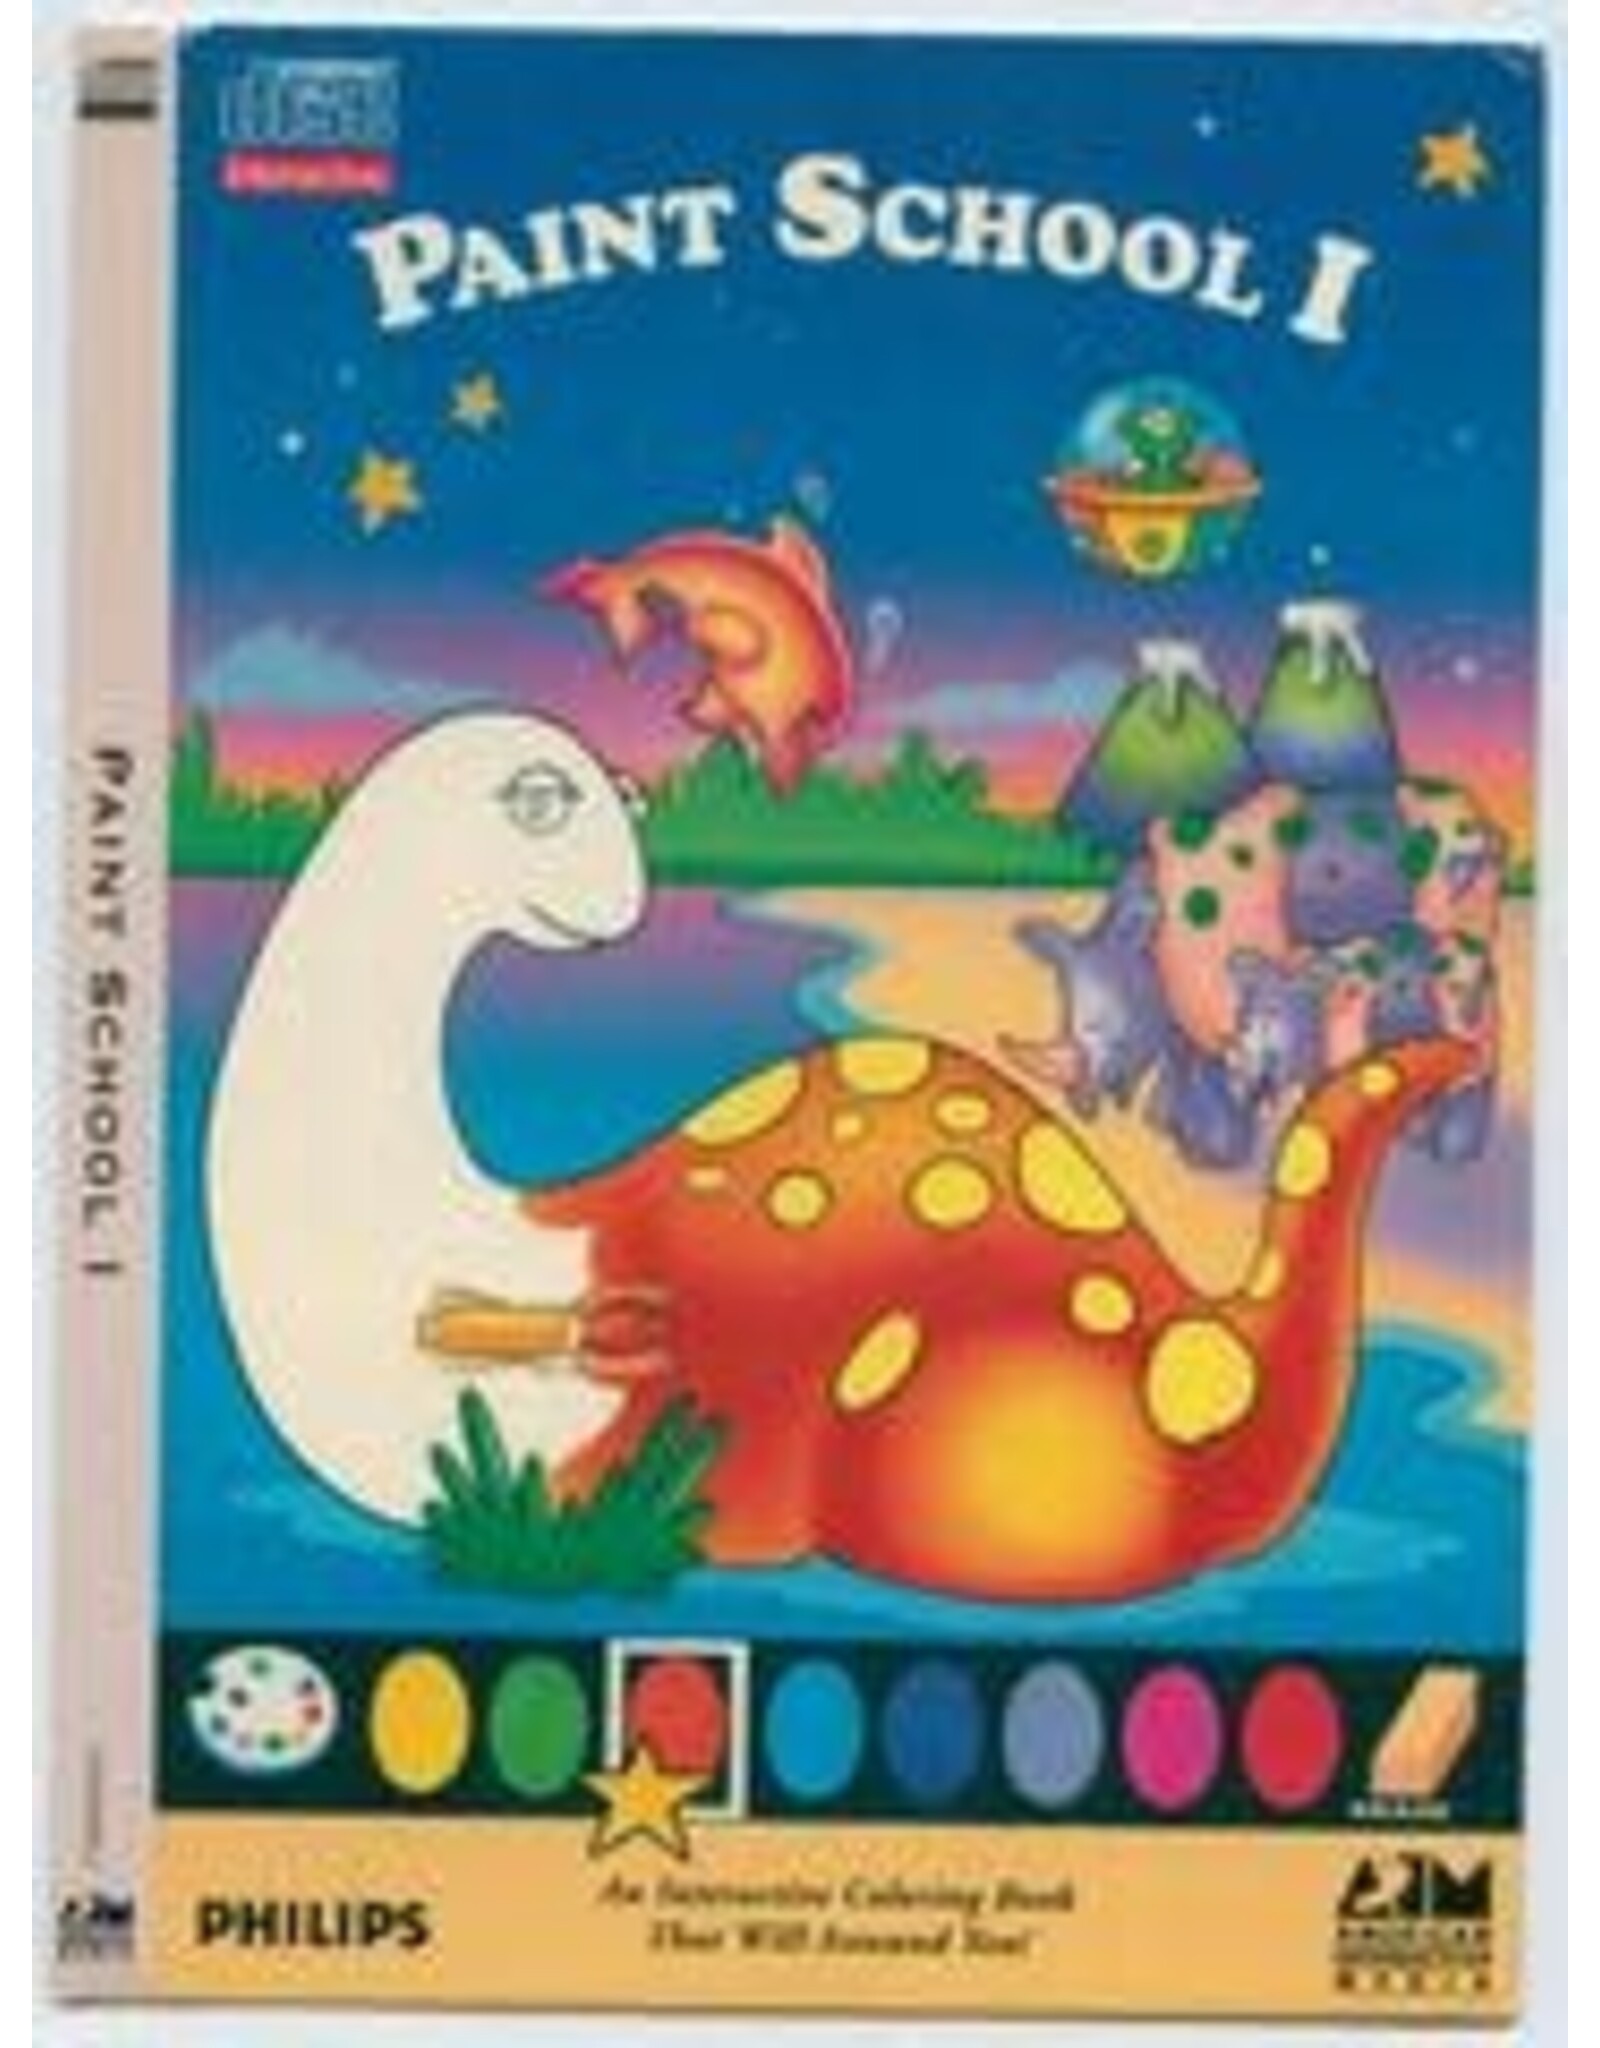 Phillip’s CD-i Paint School I (Brand New)